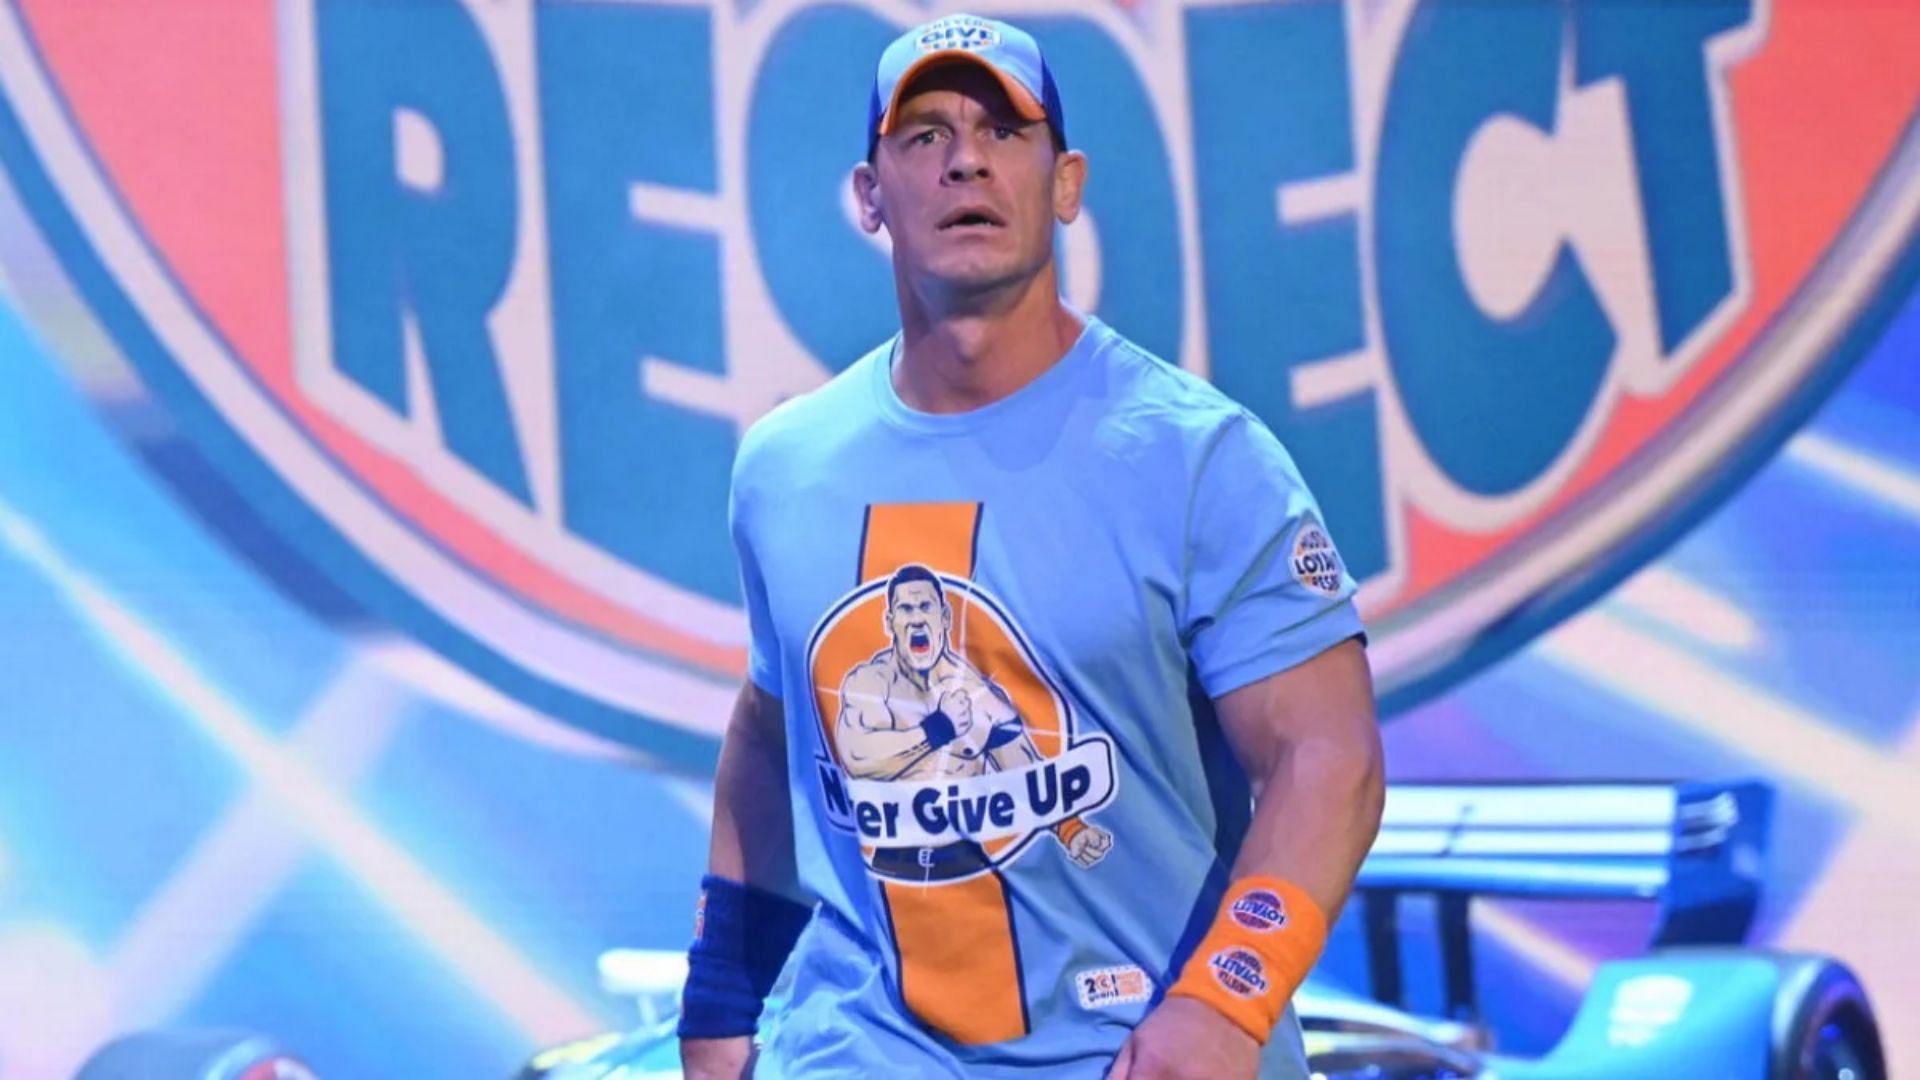 John Cena is once again a regular on WWE TV